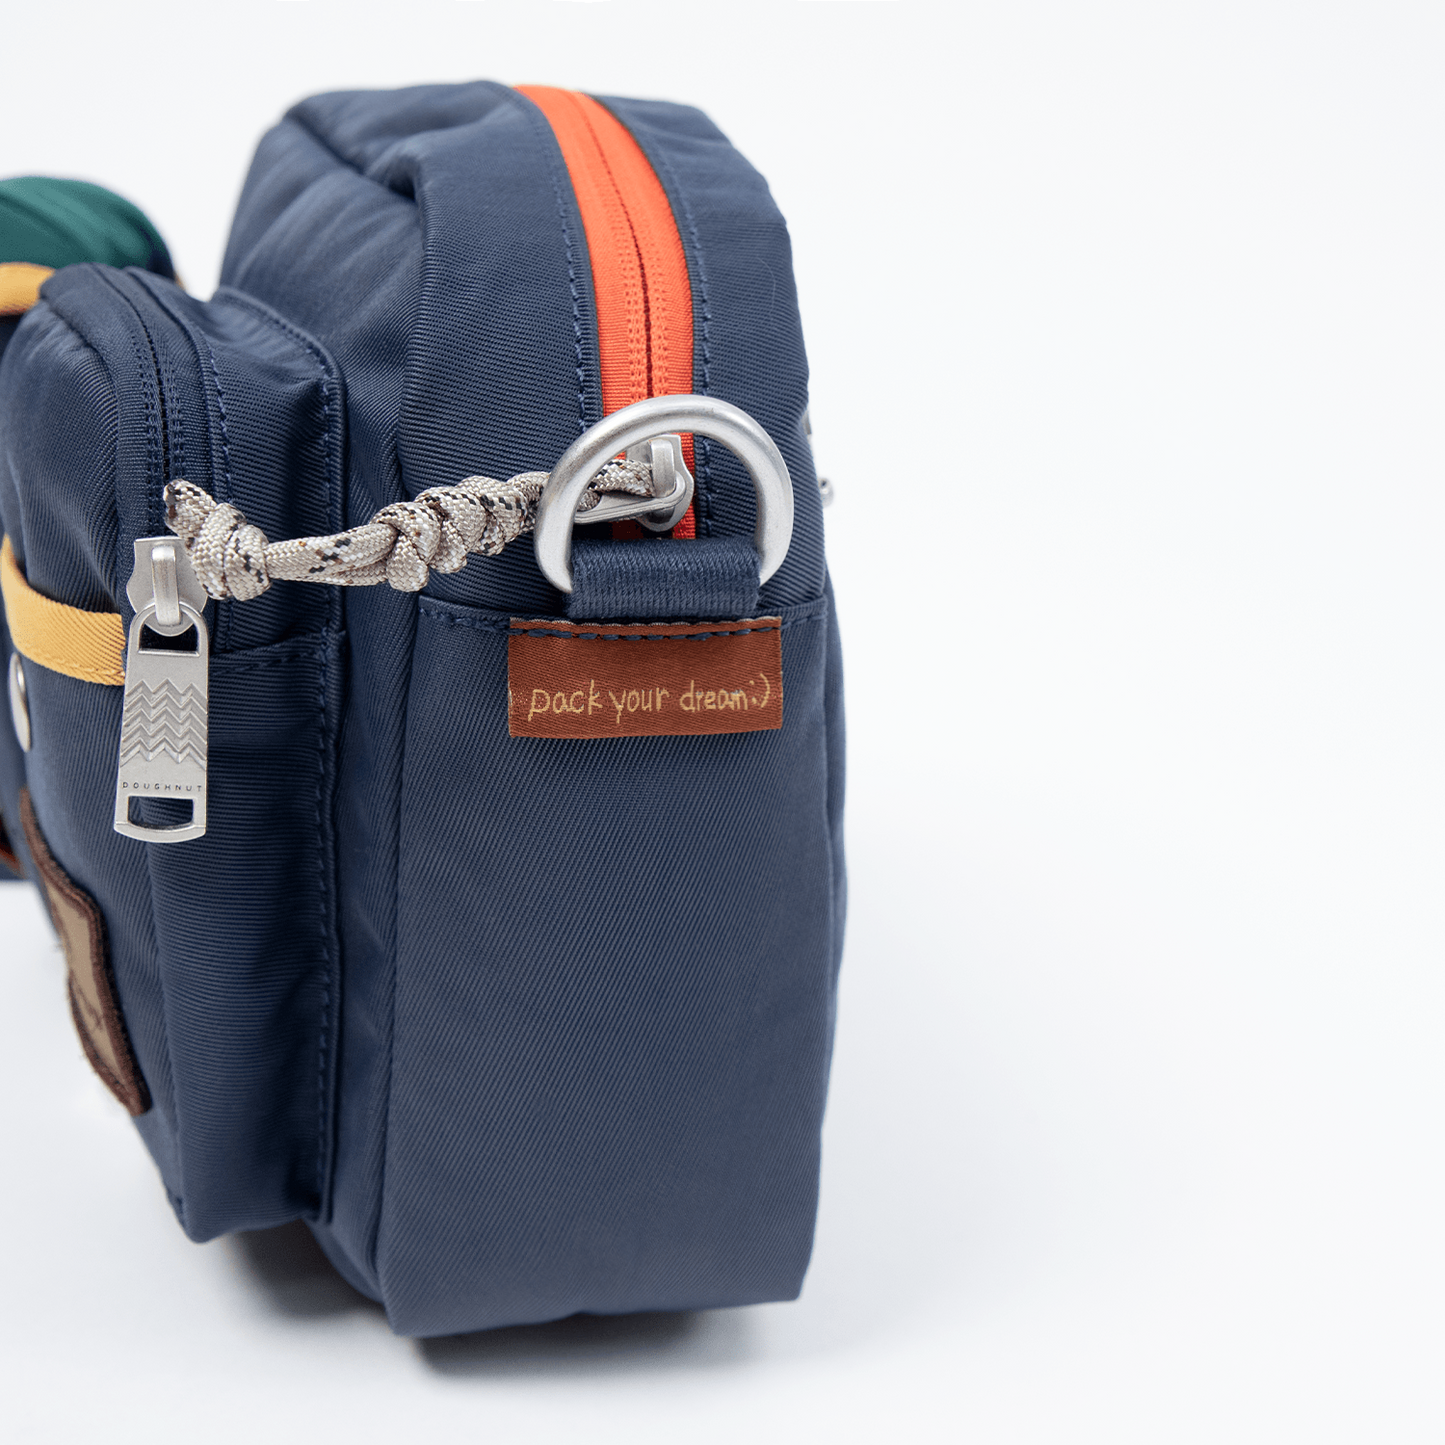 Binocular Happy Camper Series Crossbody Bag